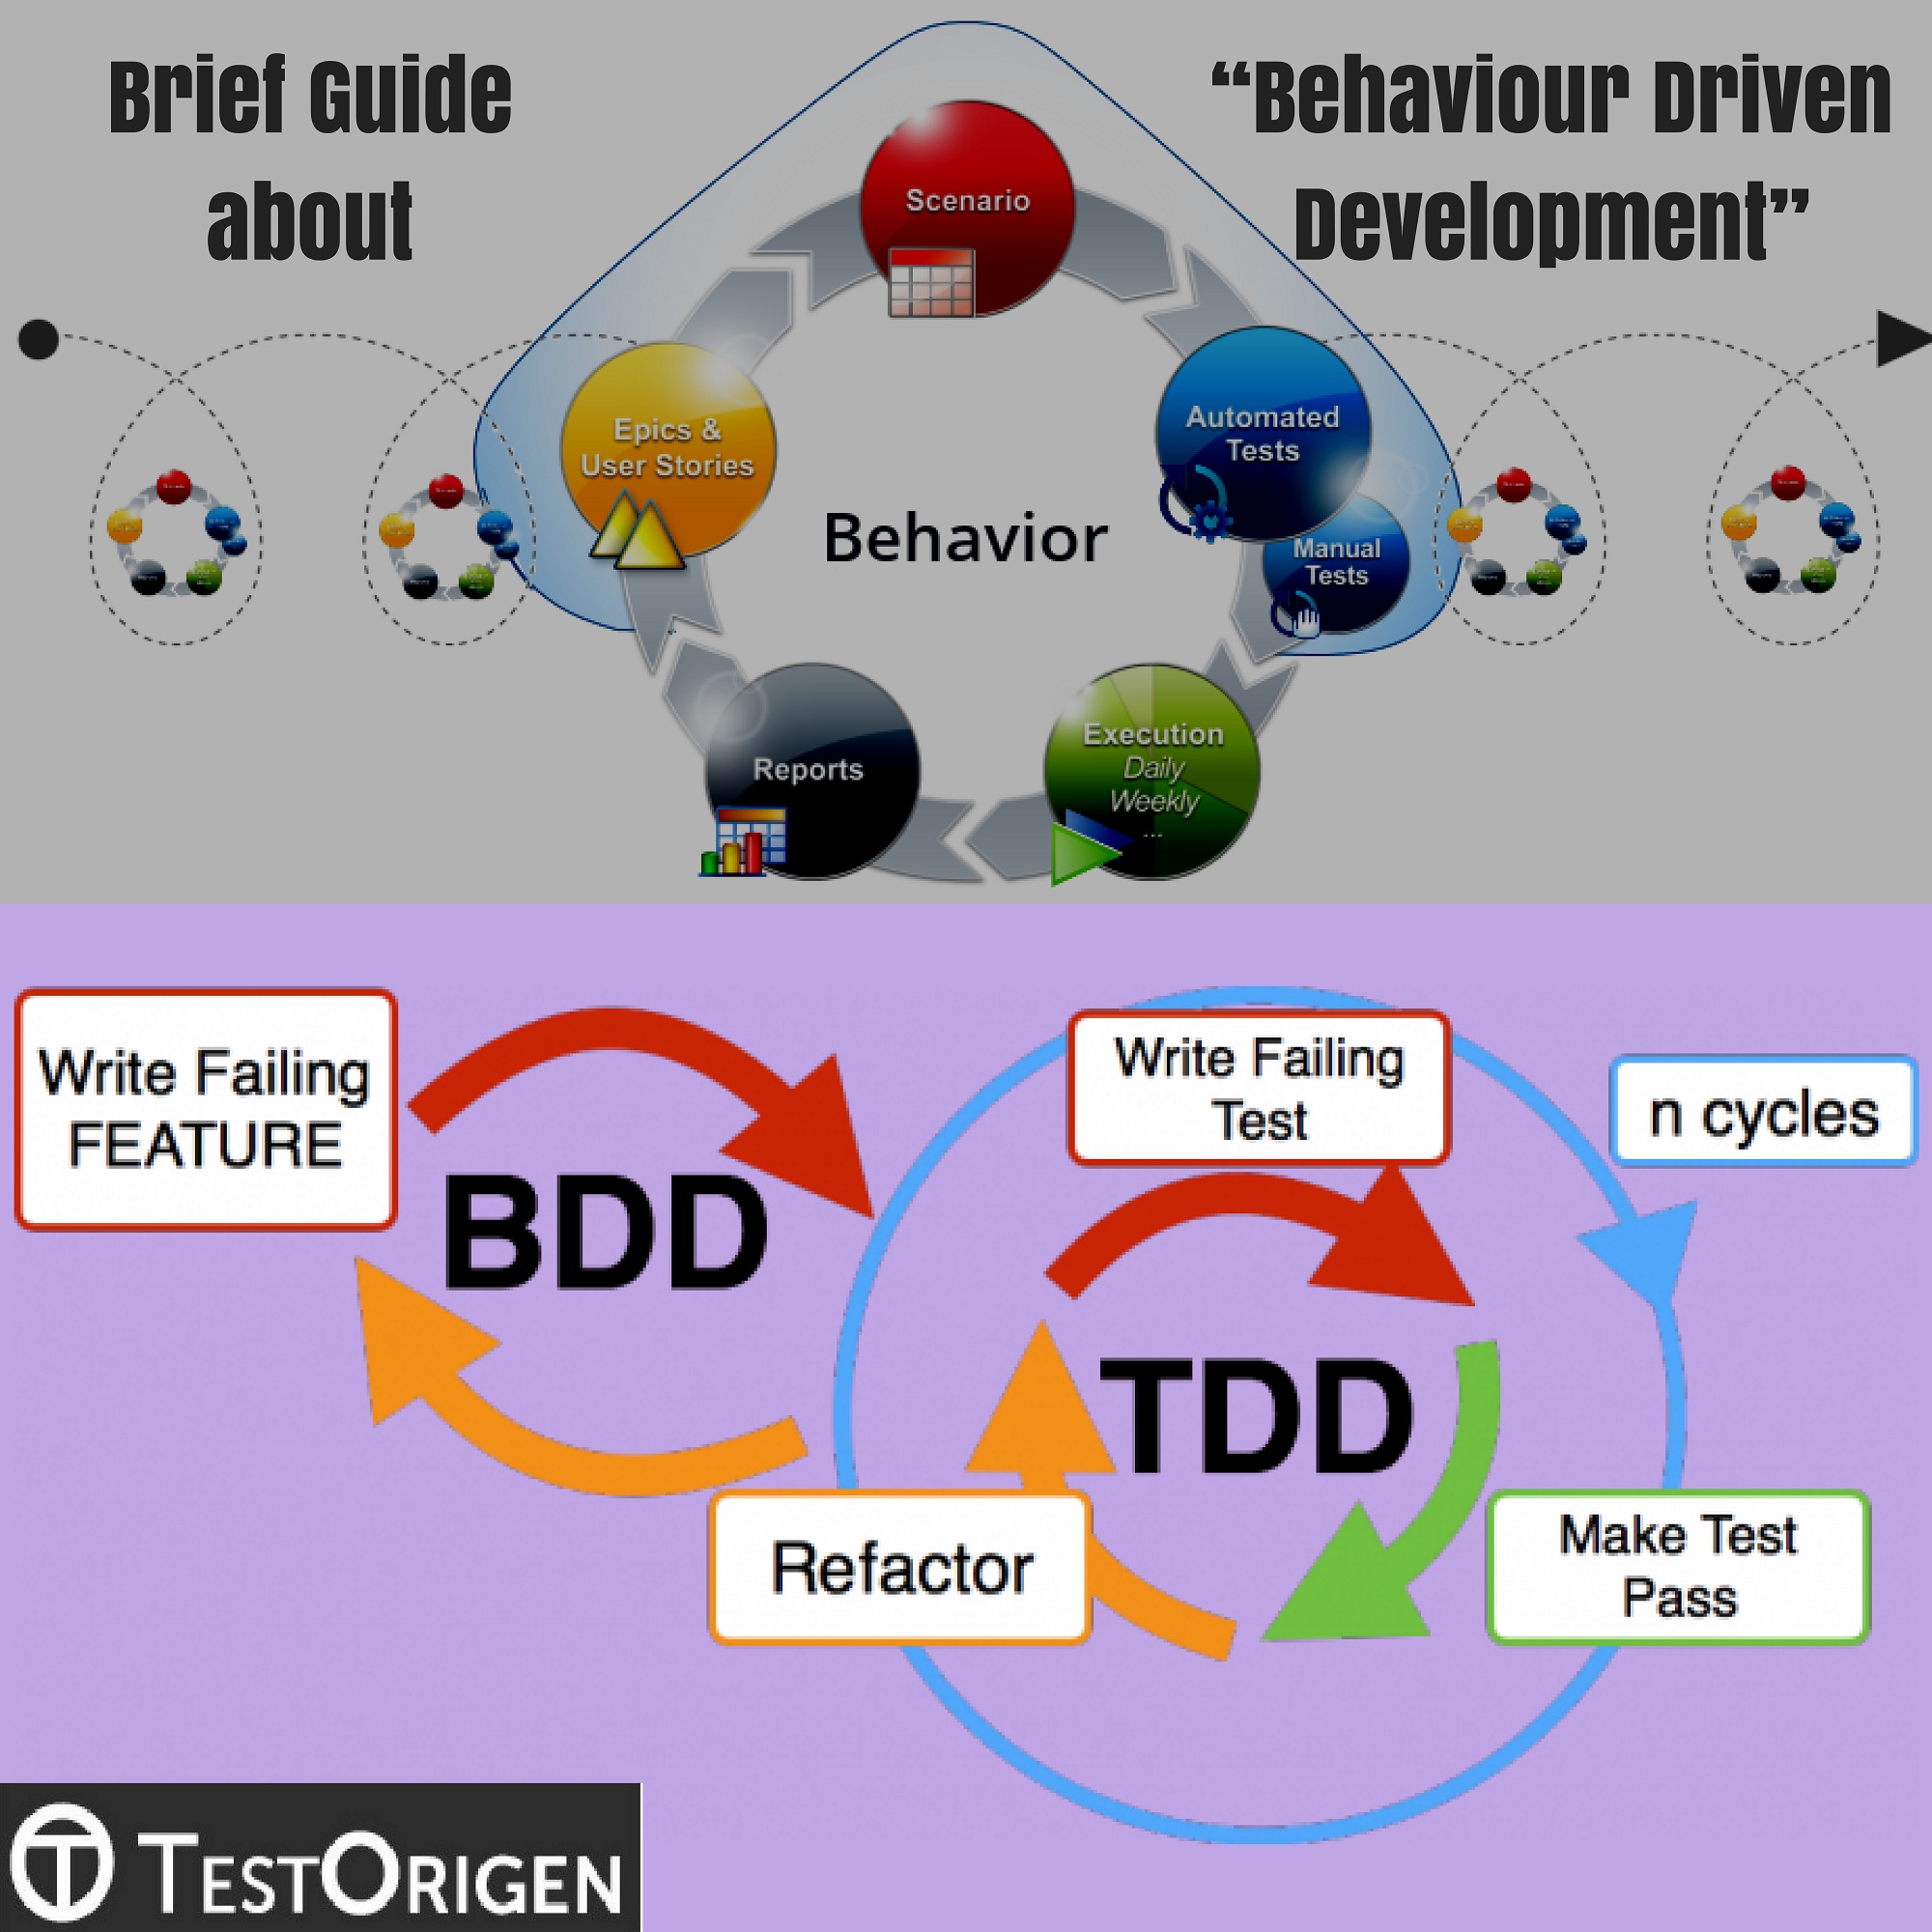 Brief Guide about “Behaviour Driven Development”